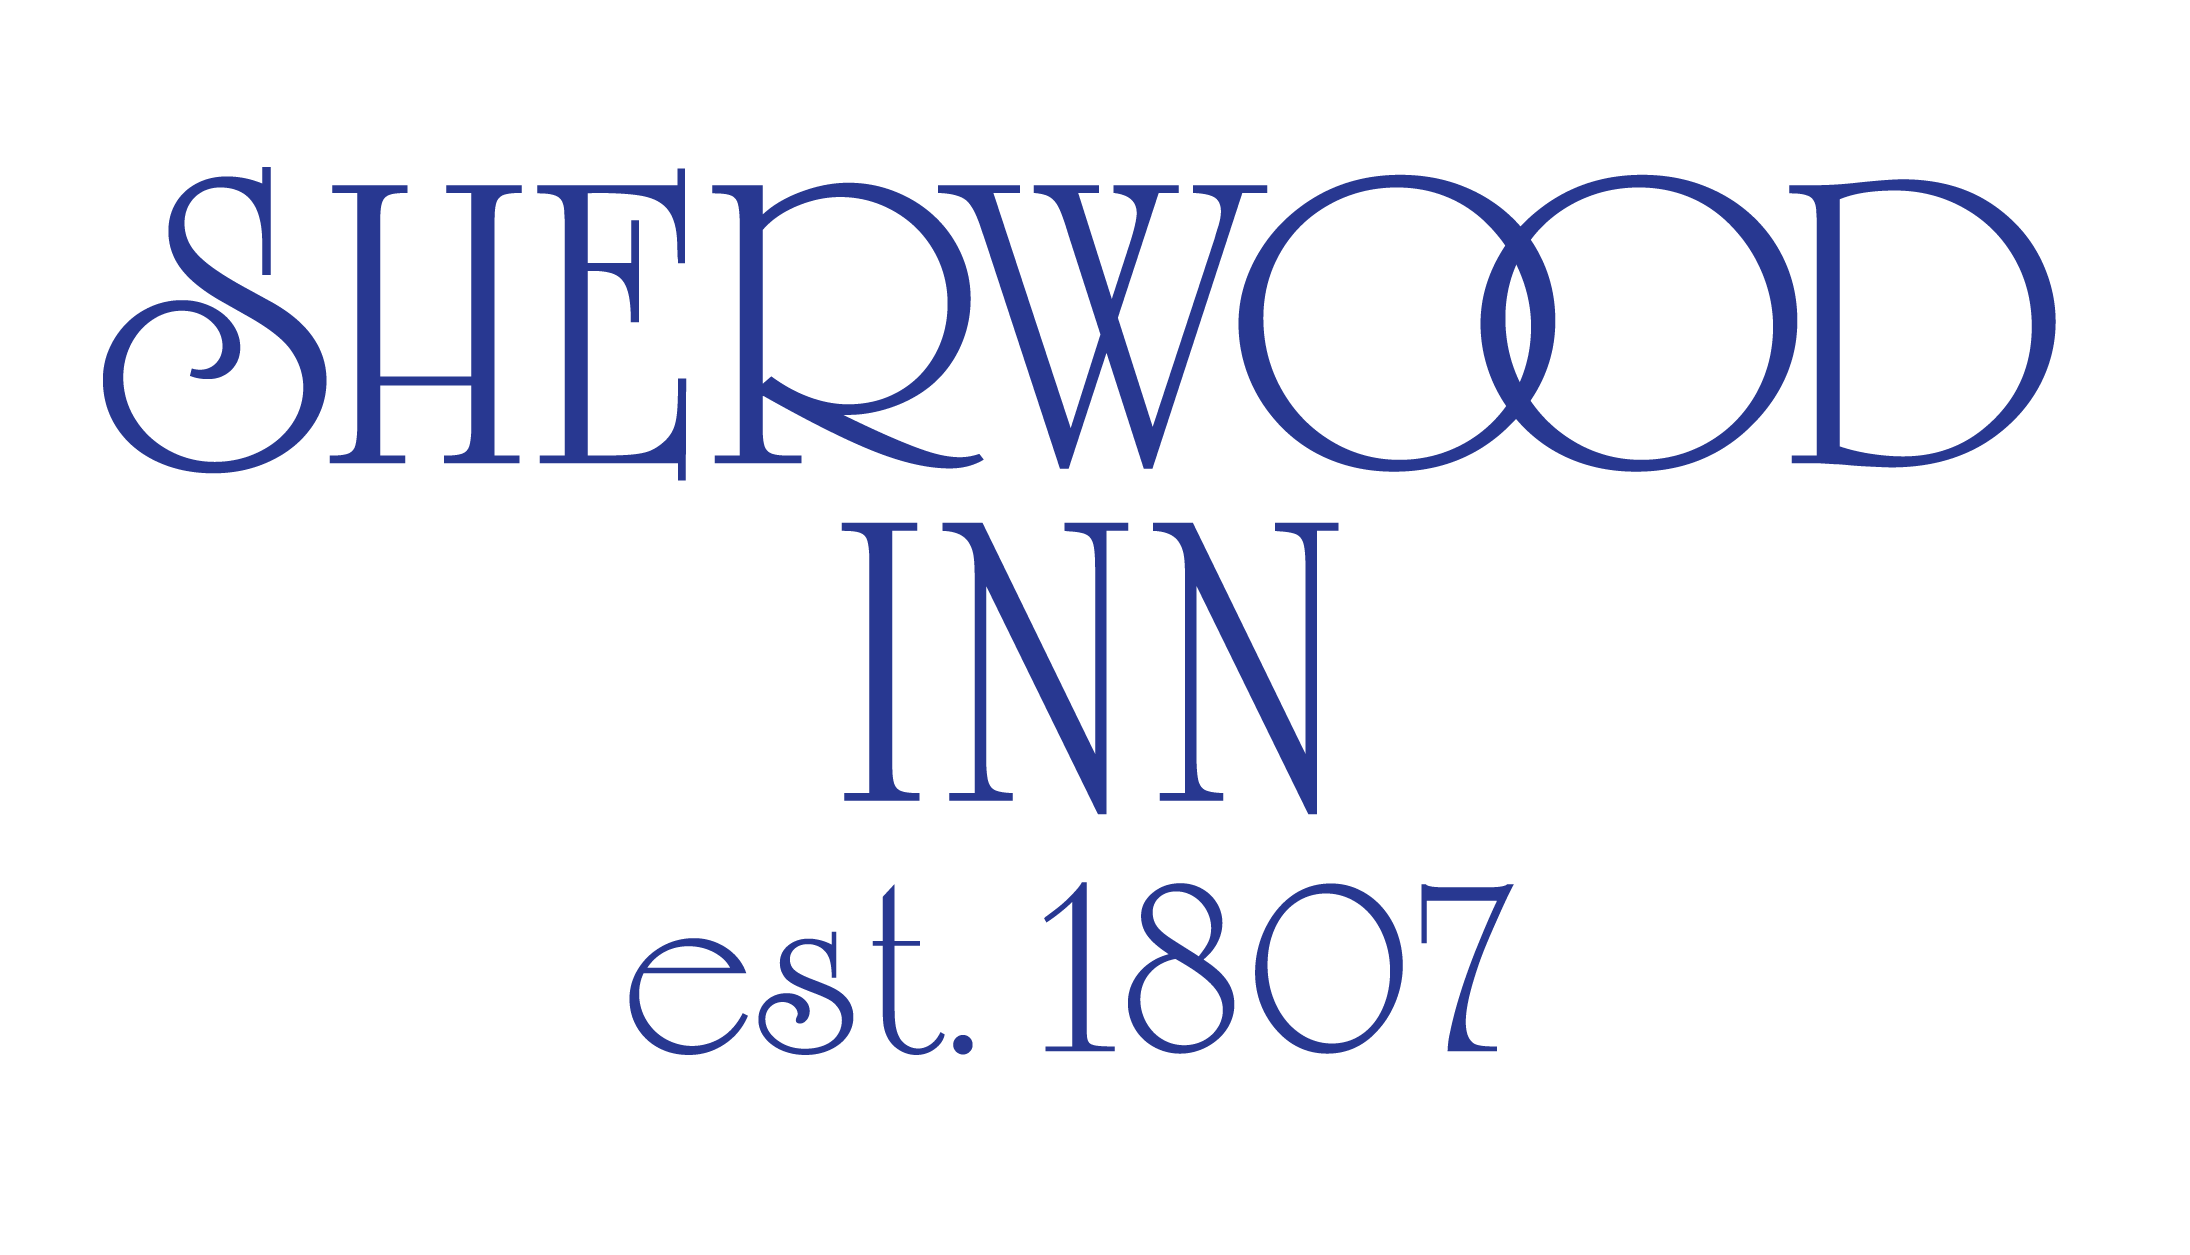 sherwood inn established in 1807